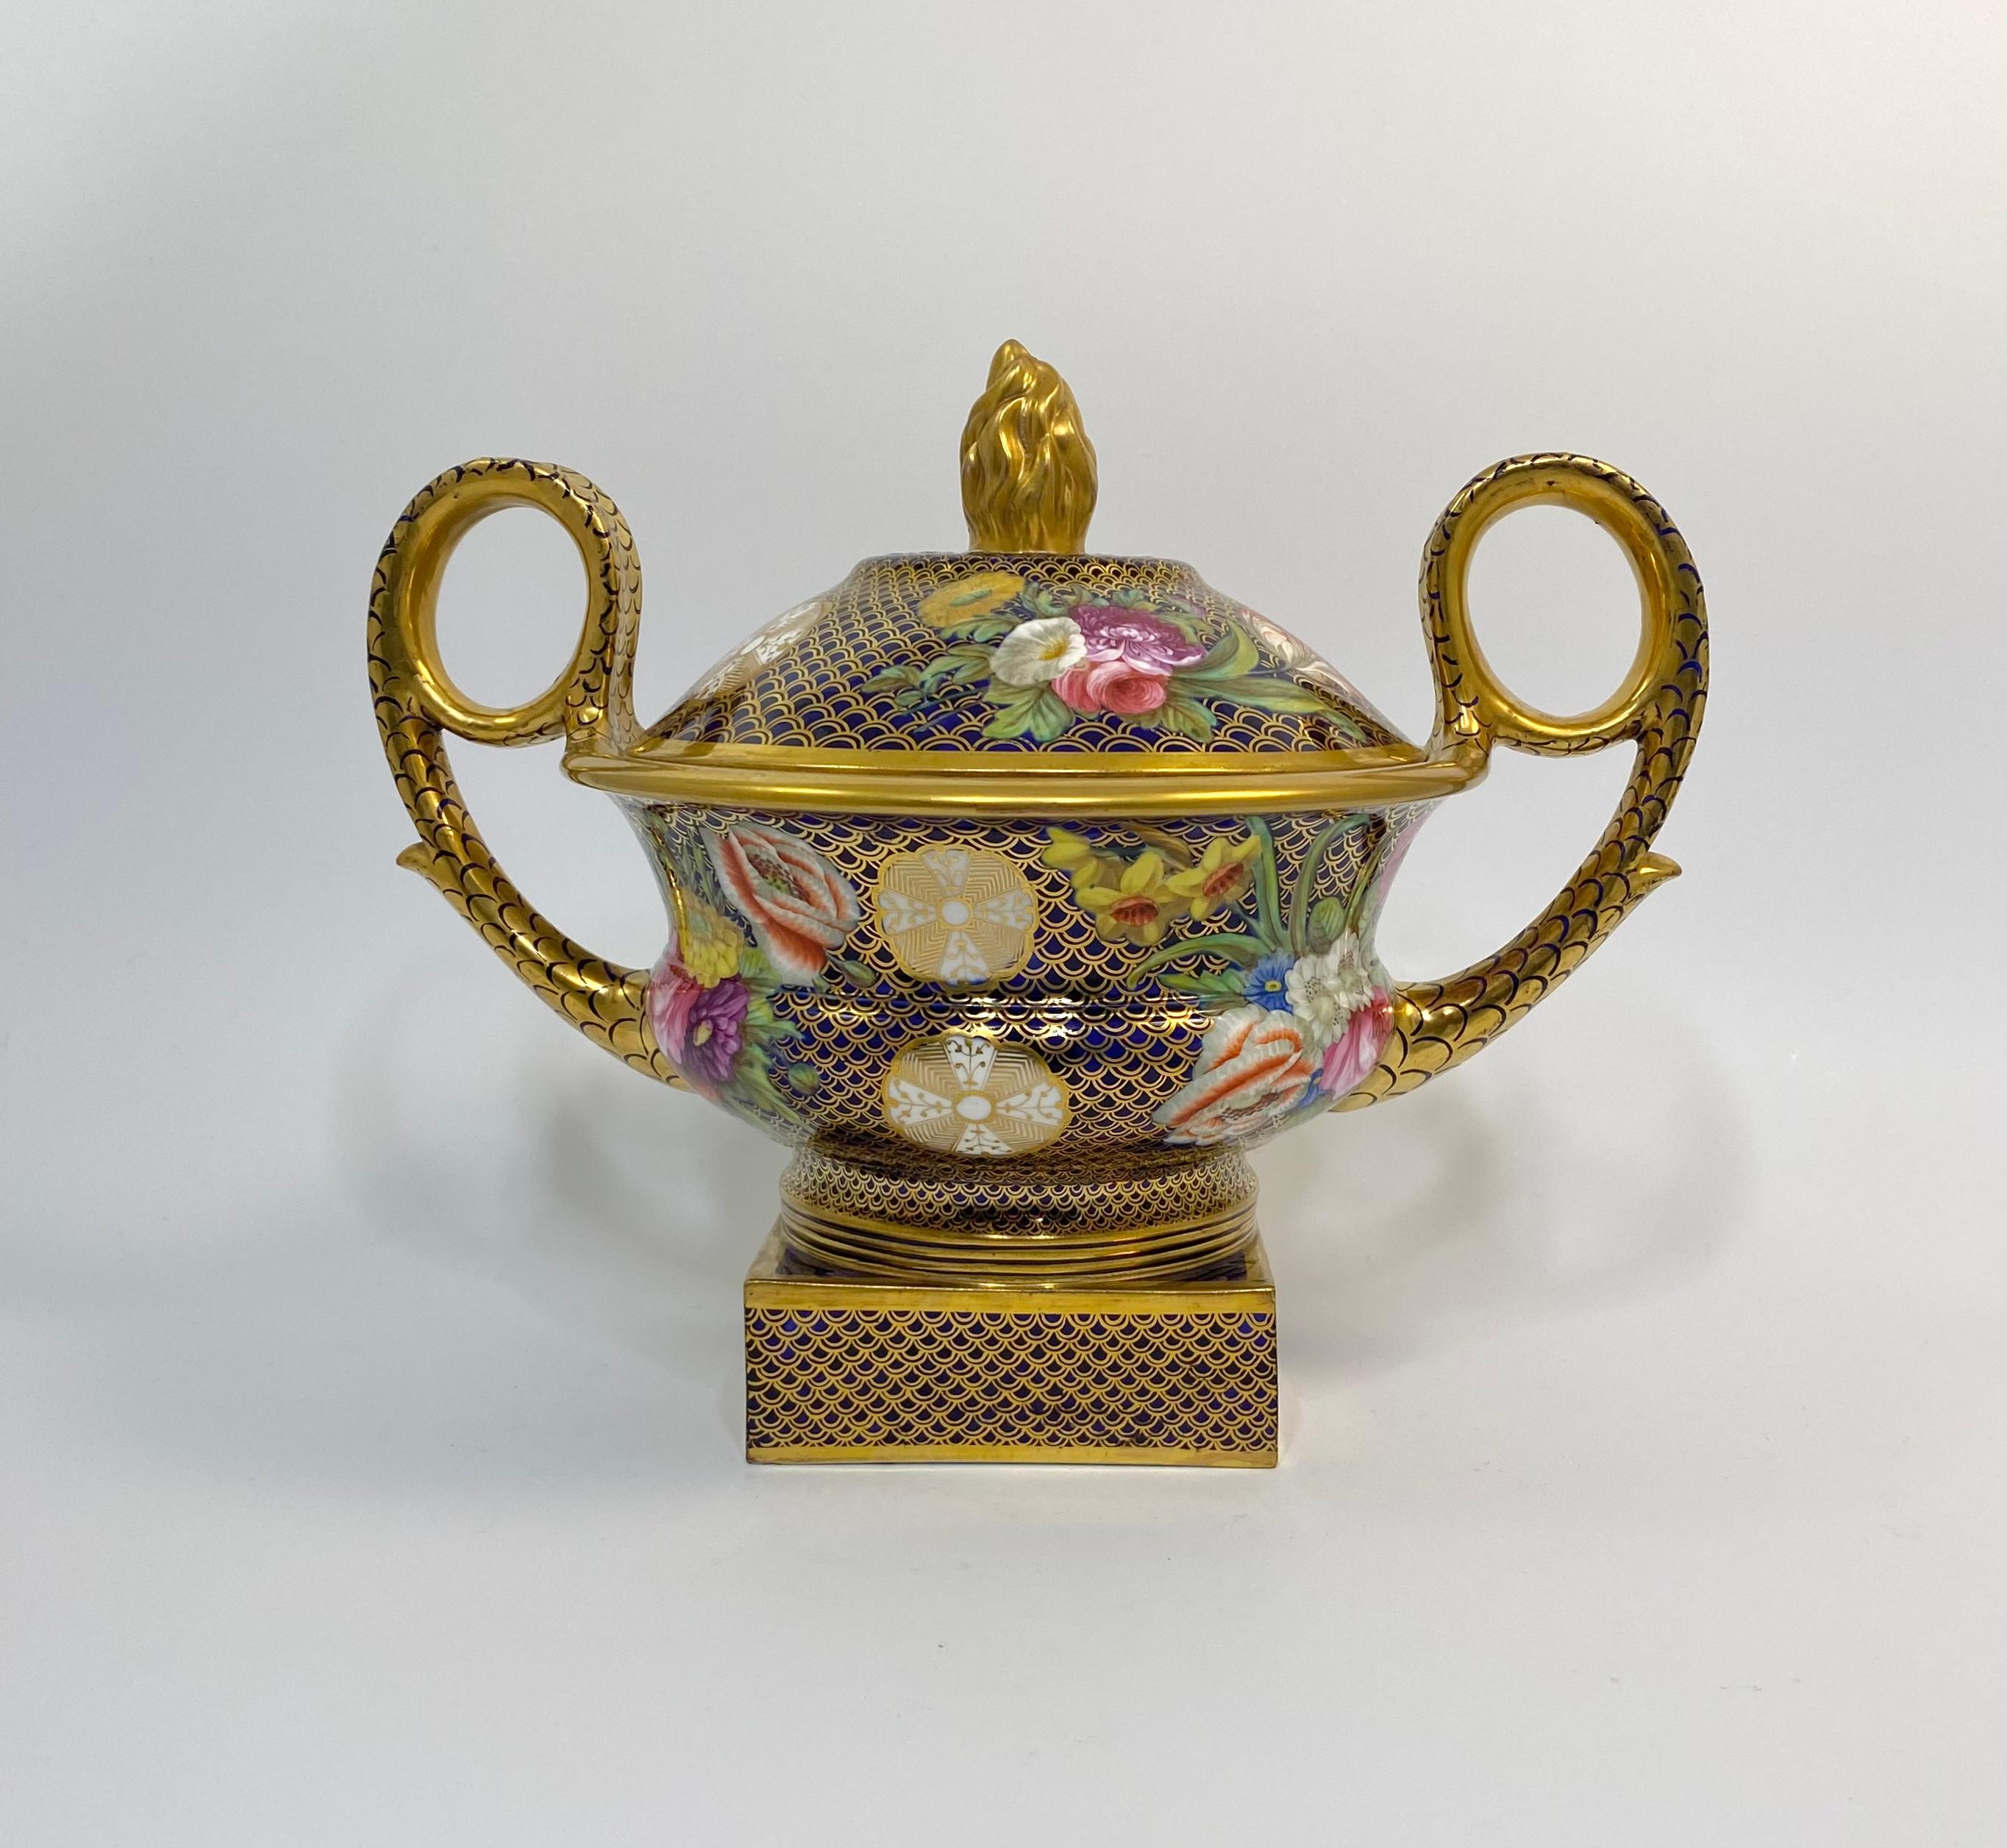 English Spode porcelain pot pourri and cover, ‘1166’ pattern, c. 1820.